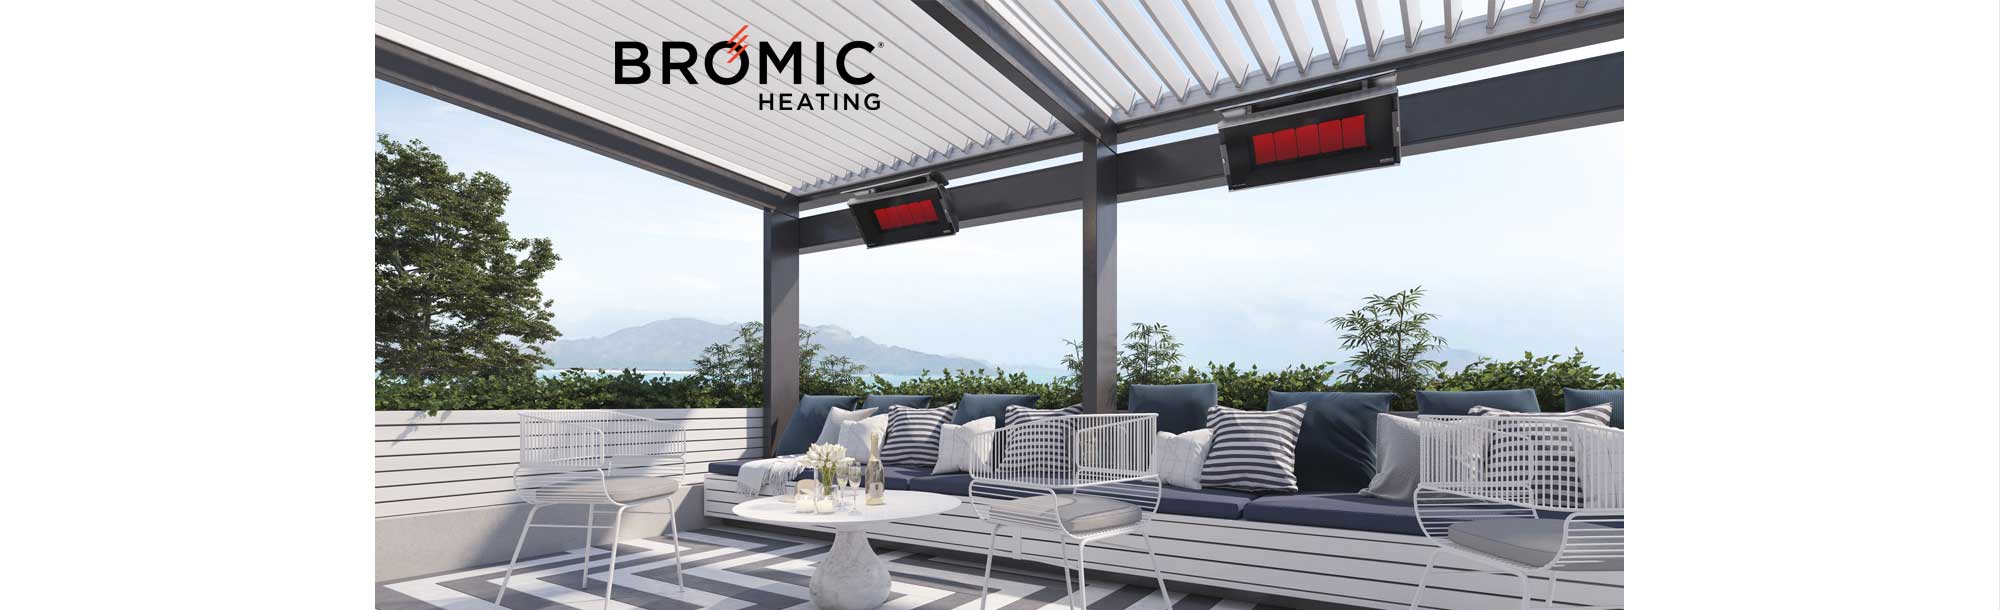 Bromic Heating. Superior Design. Superior Heat. Patio area with heaters.